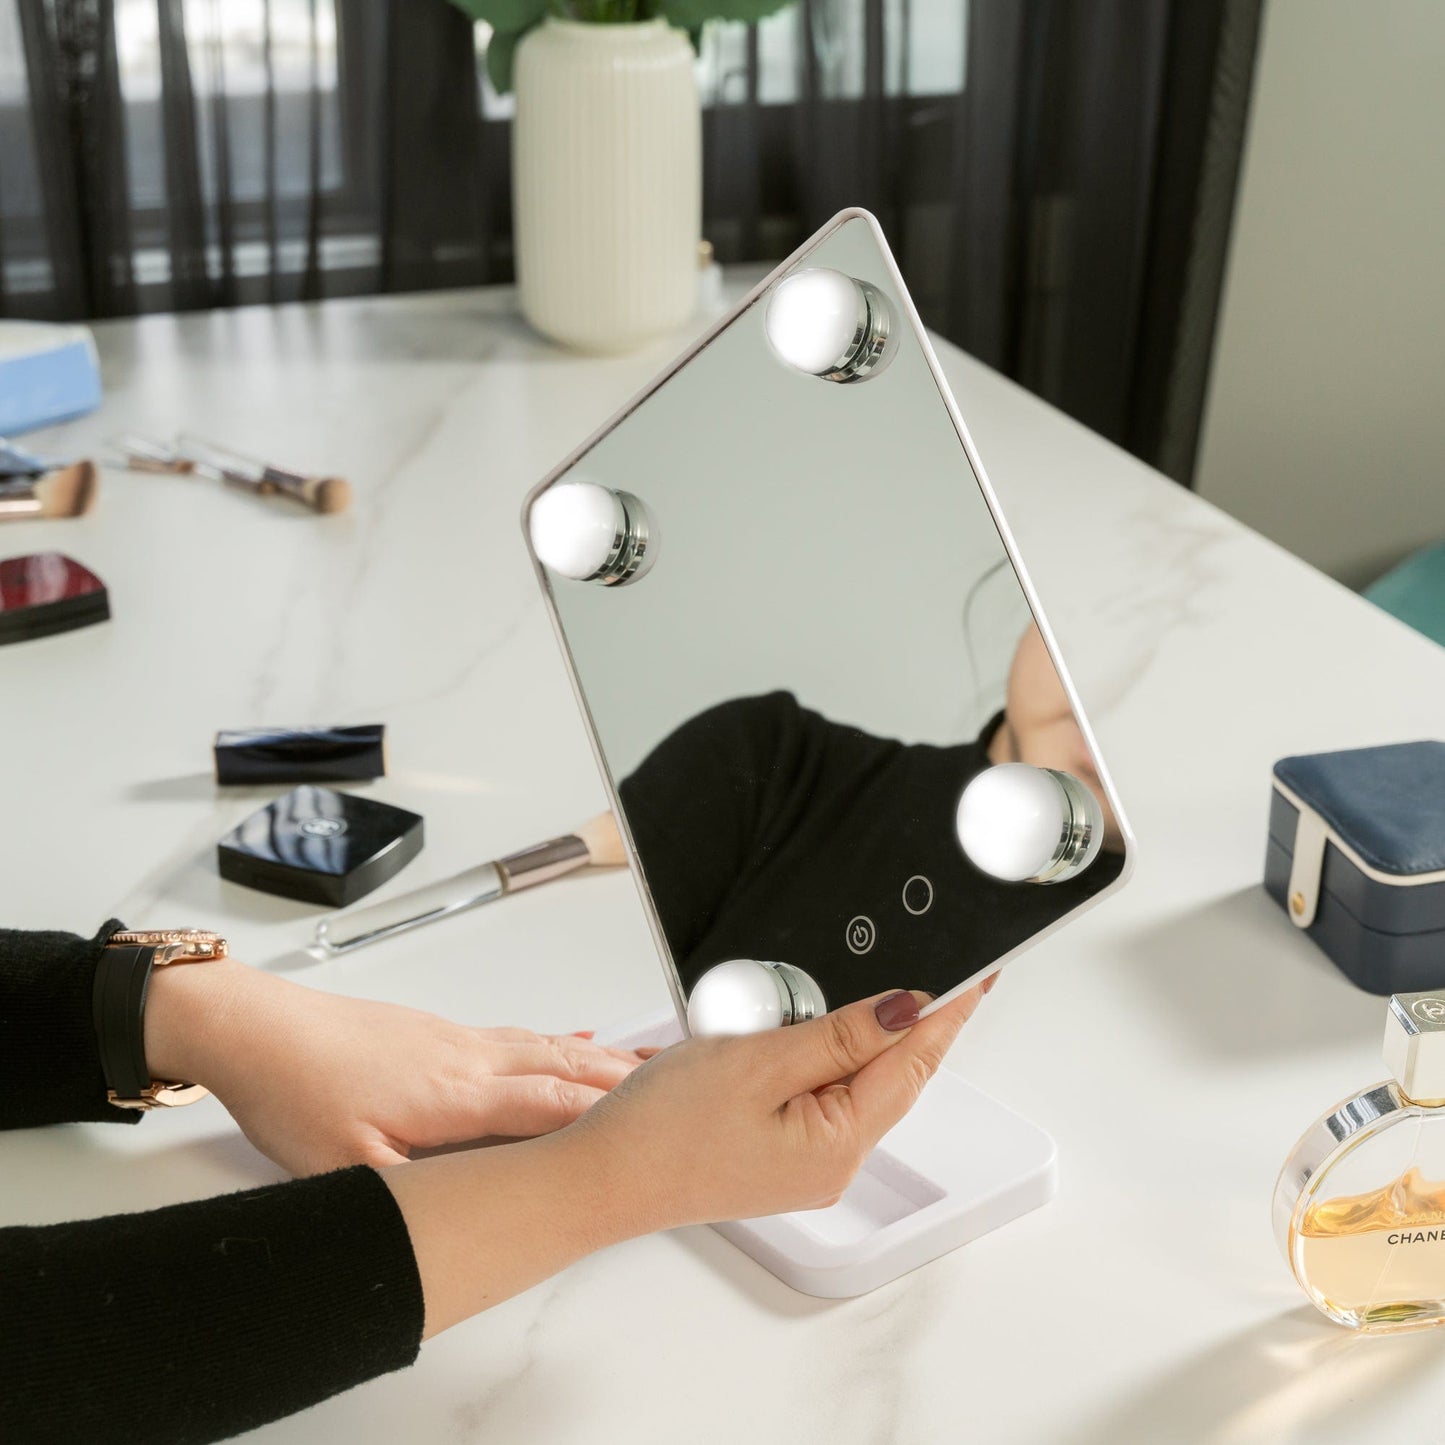 Clevinger Mirrors Clevinger Bel Air Led Illuminated Makeup Vanity Mirror Adjustable Tilt Function